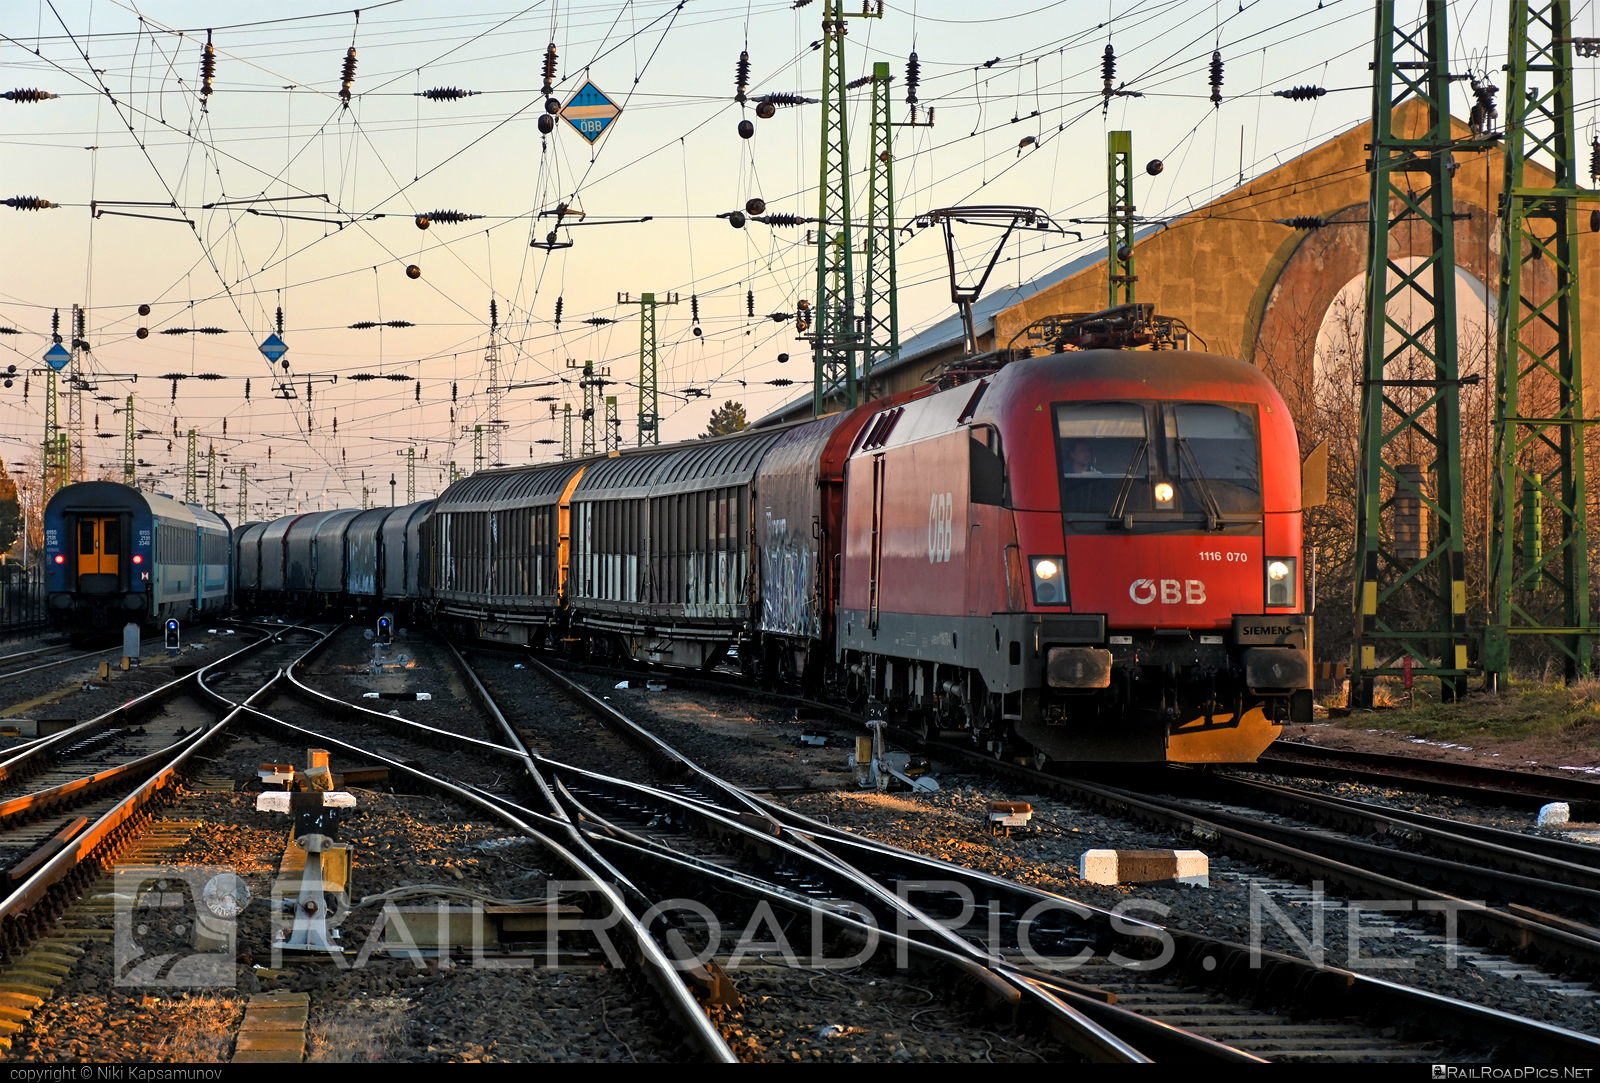 Siemens ES 64 U2 - 1116 070 operated by Rail Cargo Hungaria ZRt. #es64 #es64u2 #eurosprinter #obb #osterreichischebundesbahnen #rch #siemens #siemenses64 #siemenses64u2 #siemenstaurus #taurus #tauruslocomotive